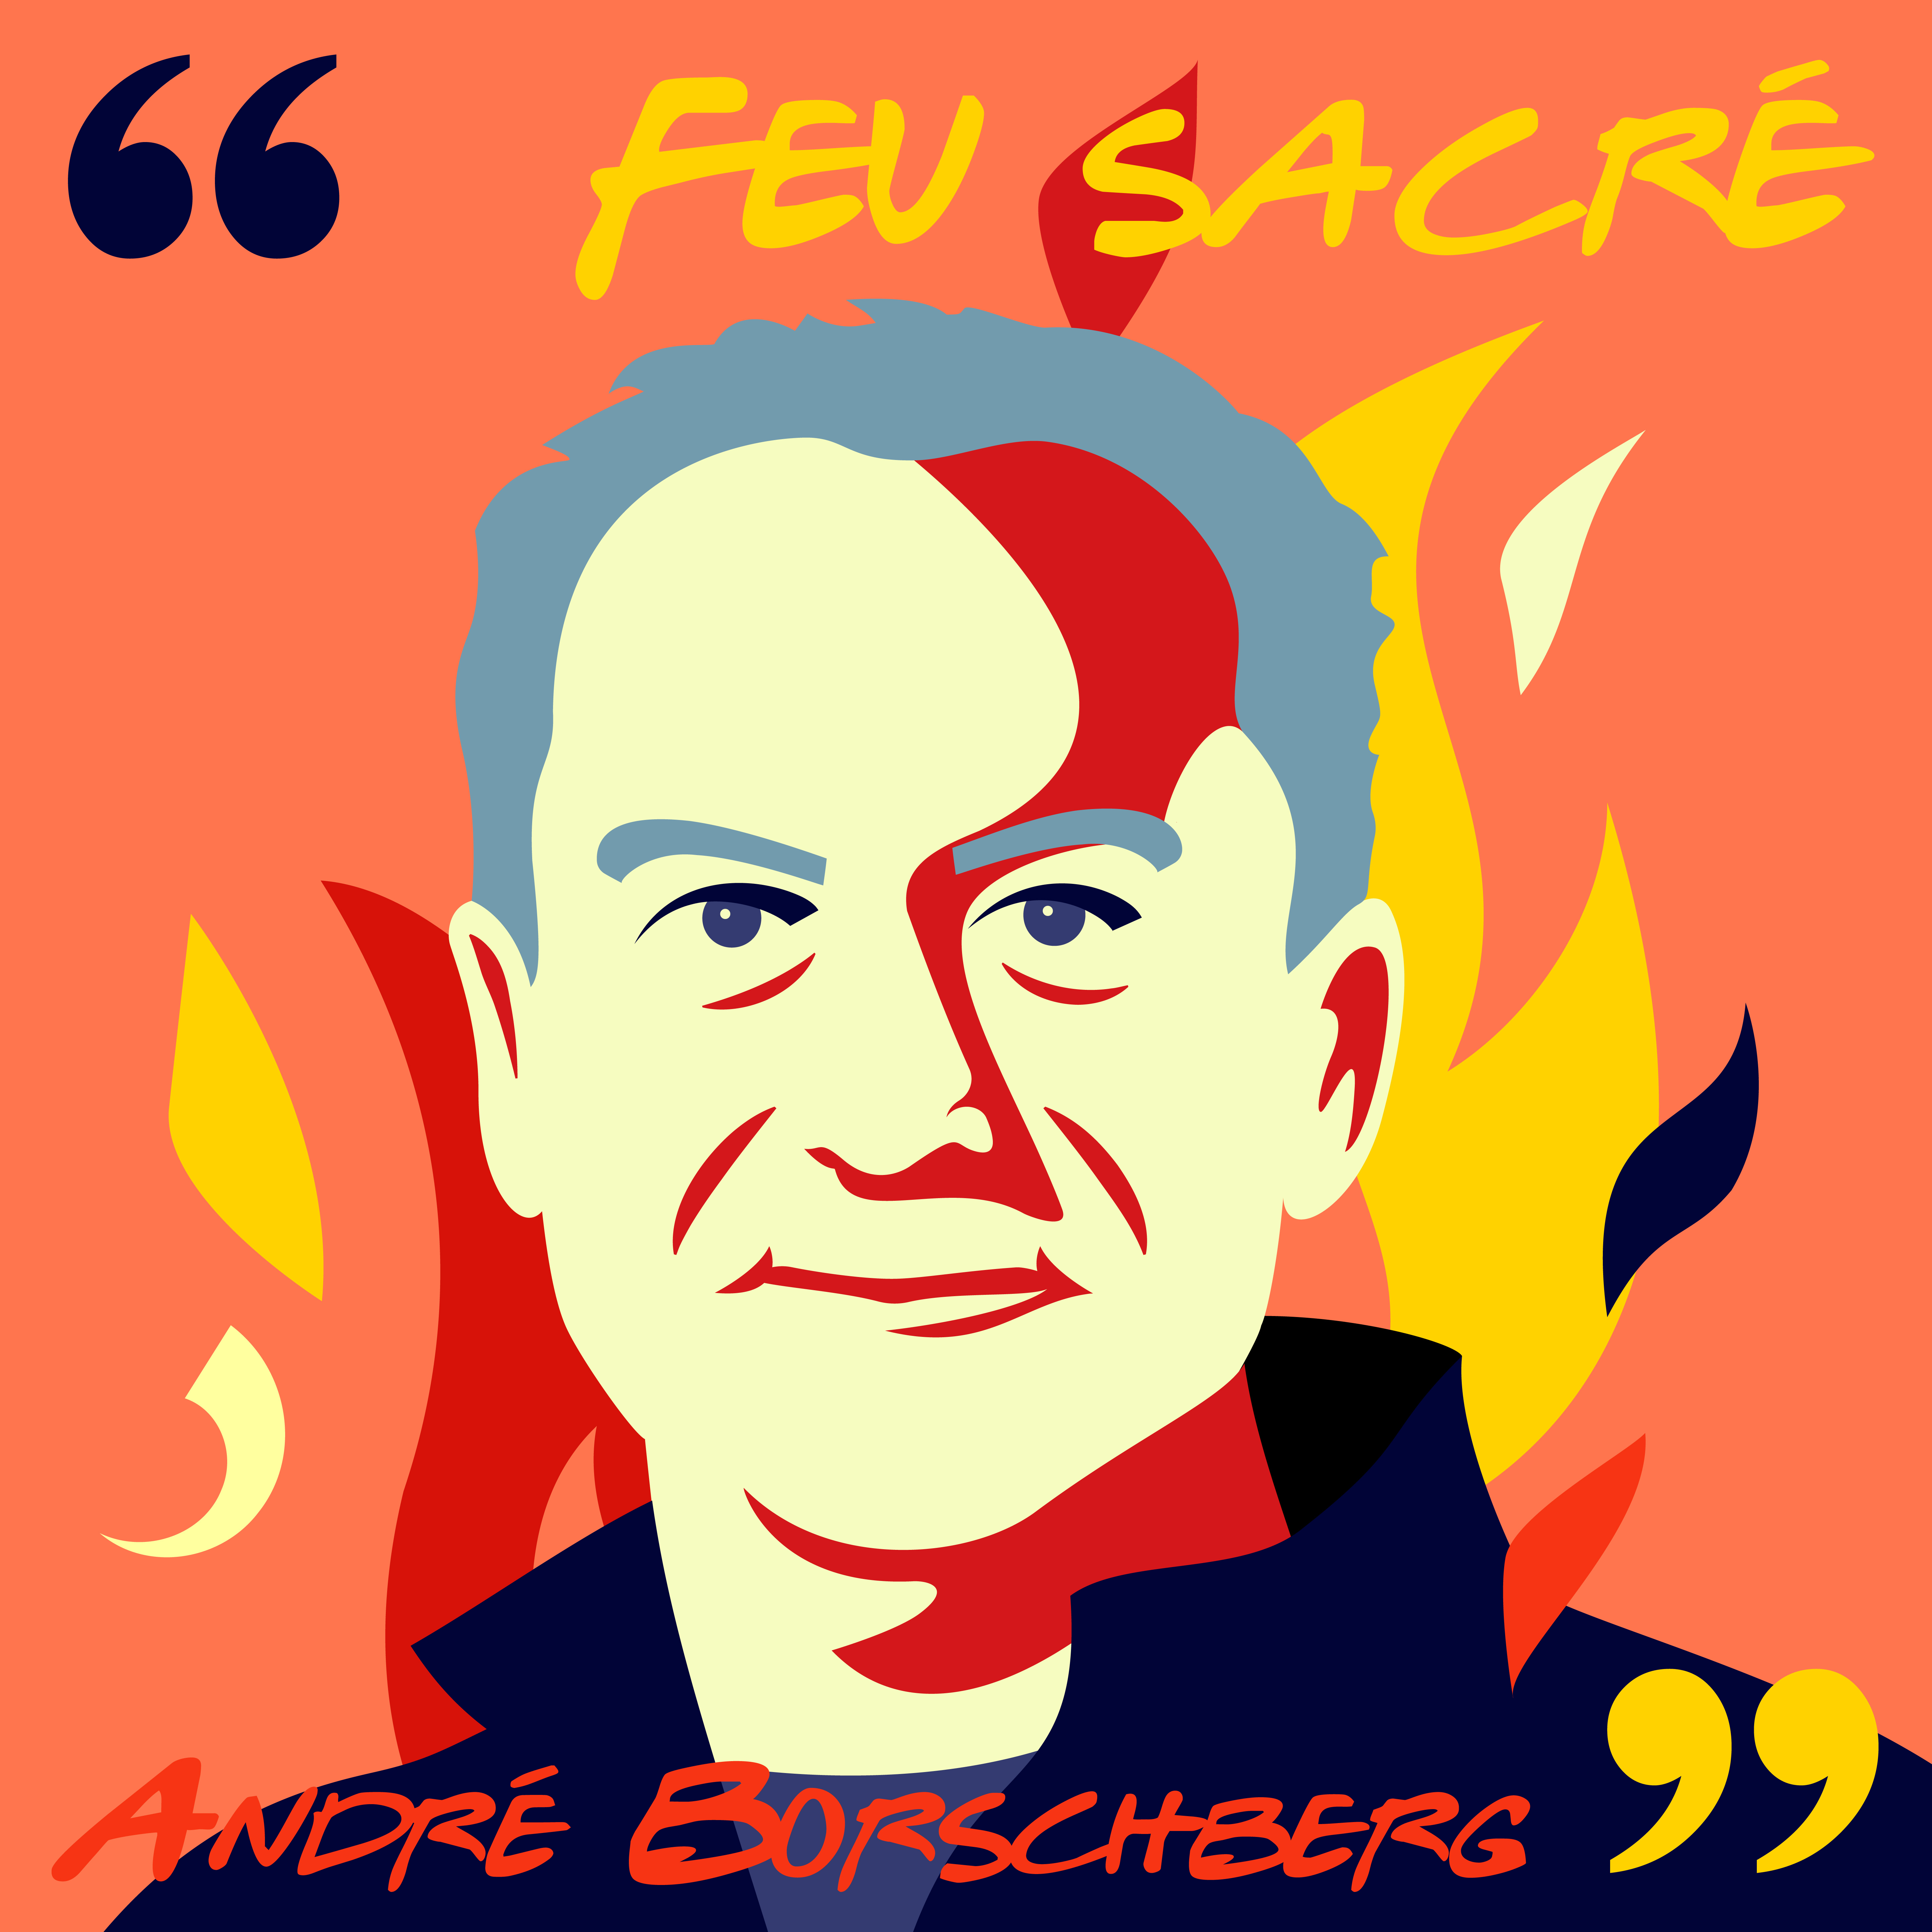 André Borschberg Feu sacré Podcast